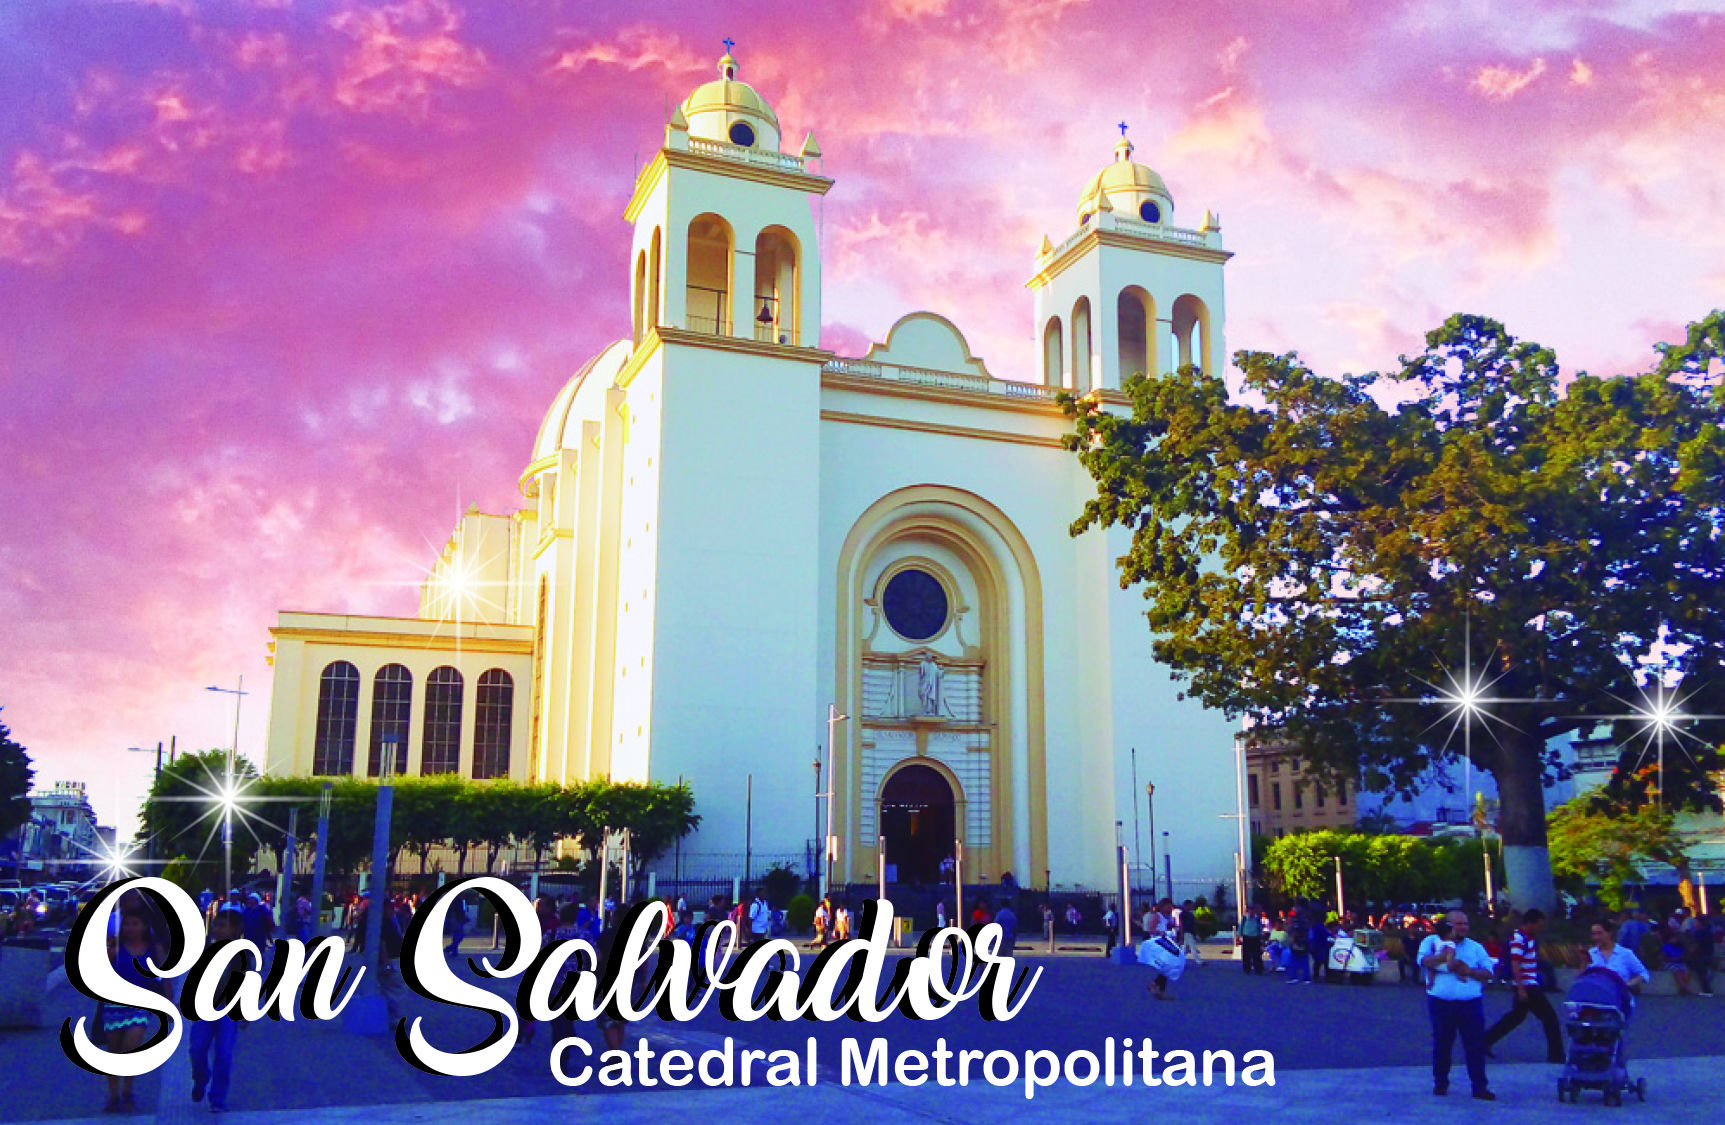 Magneto rectangular Catedral Metropolitana de San Salvador